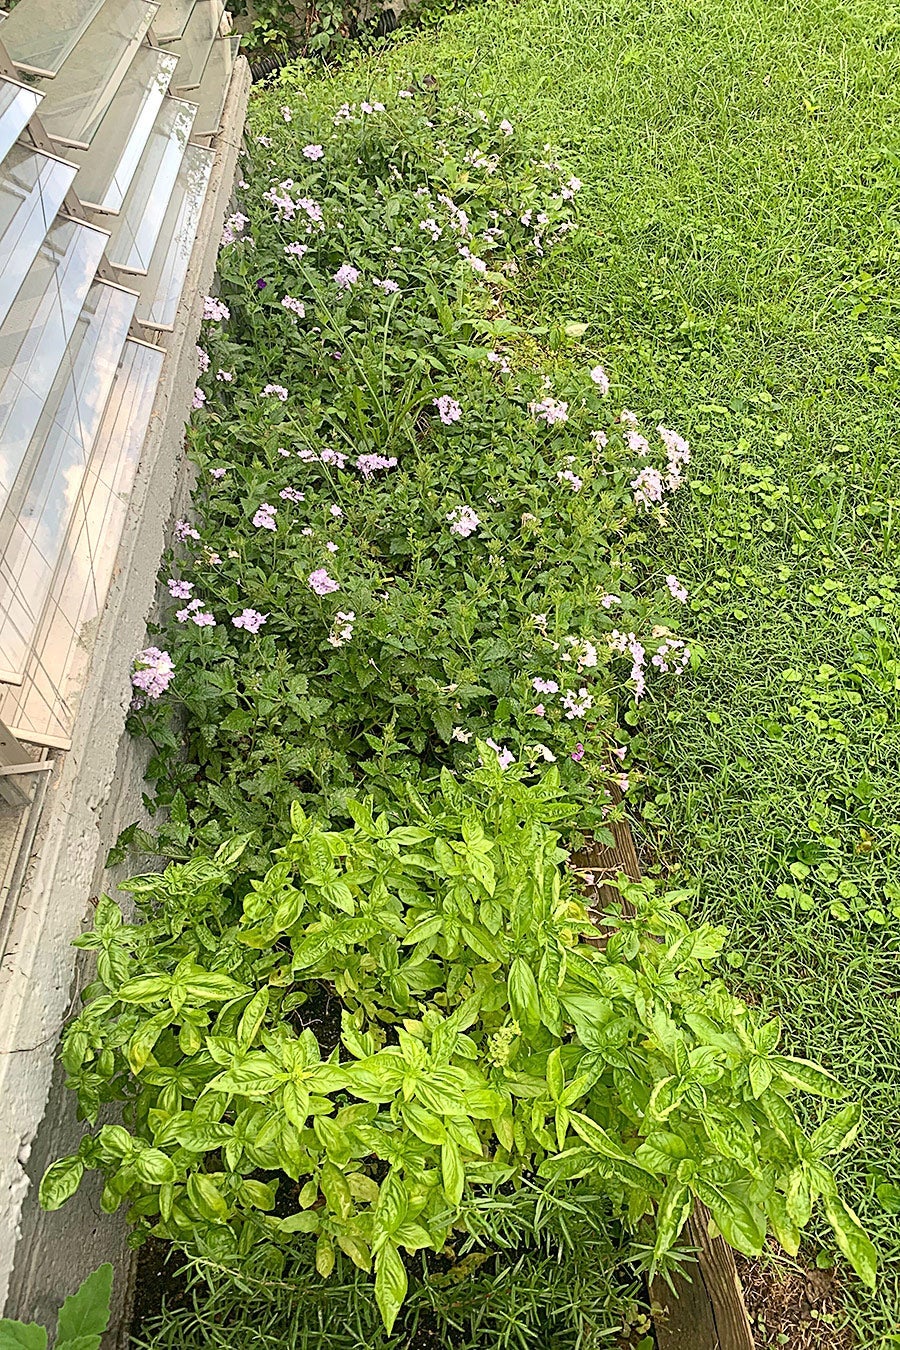 A flourishing basil plant next to flower bushes